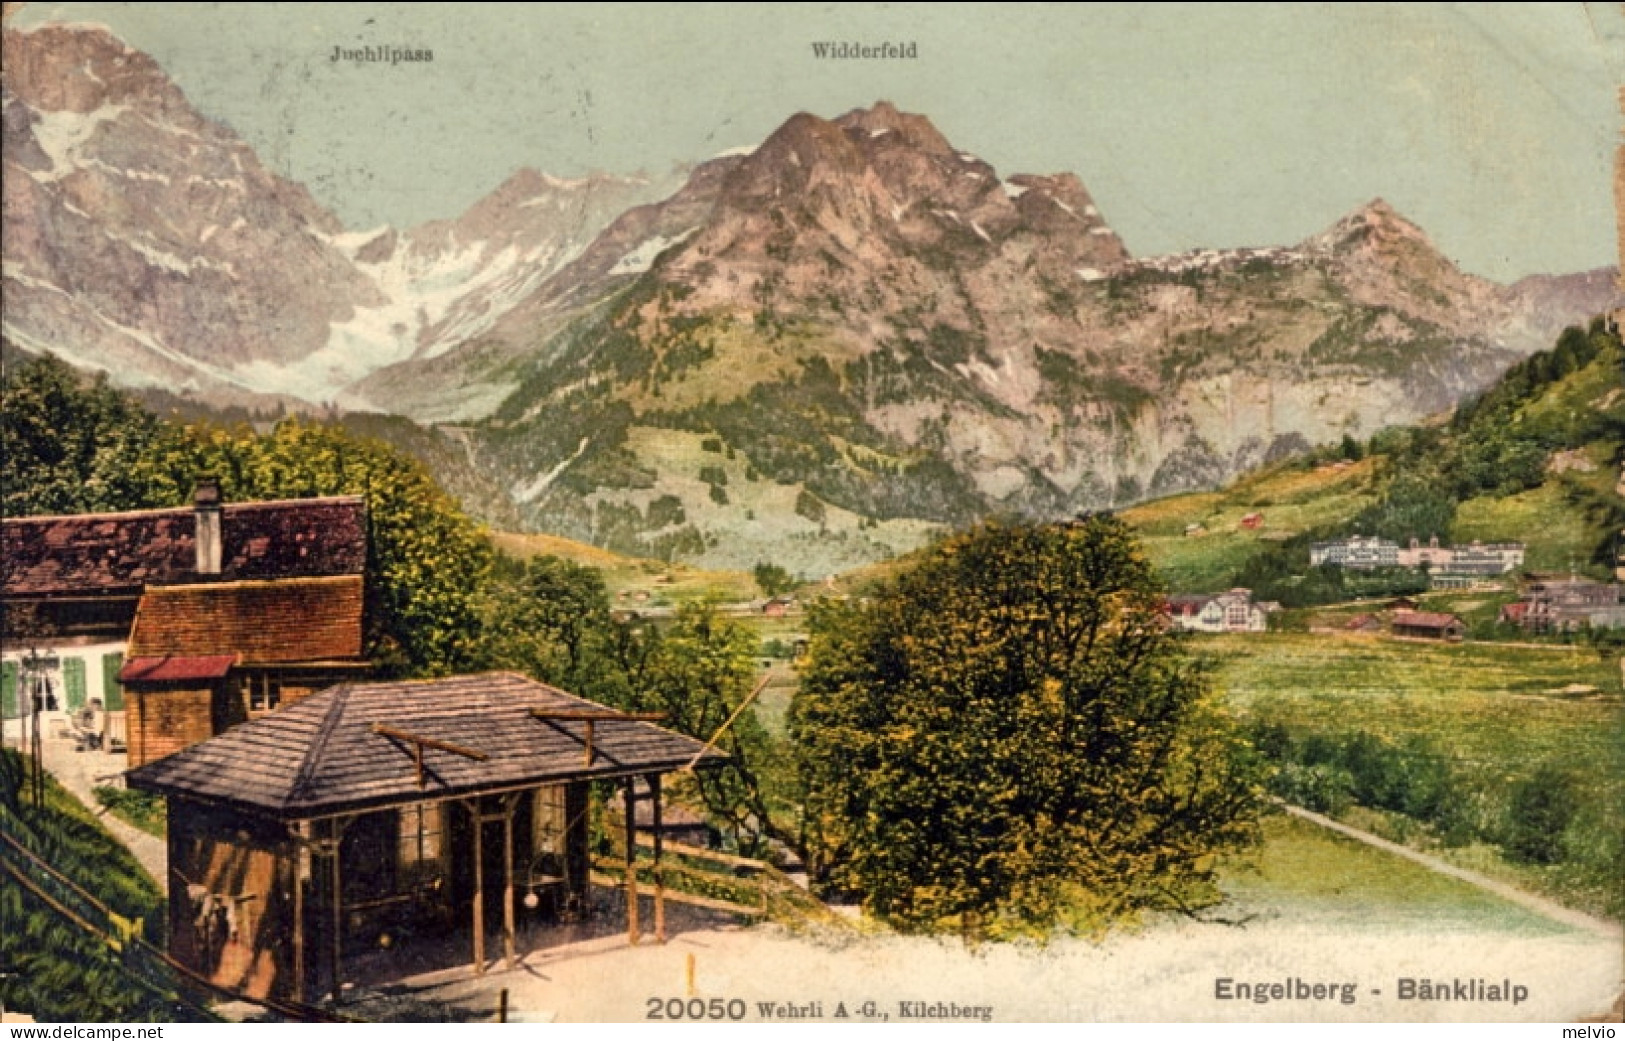 1907-Svizzera Engelberg Banklialp, Viaggiata Diretta In Belgio - Poststempel